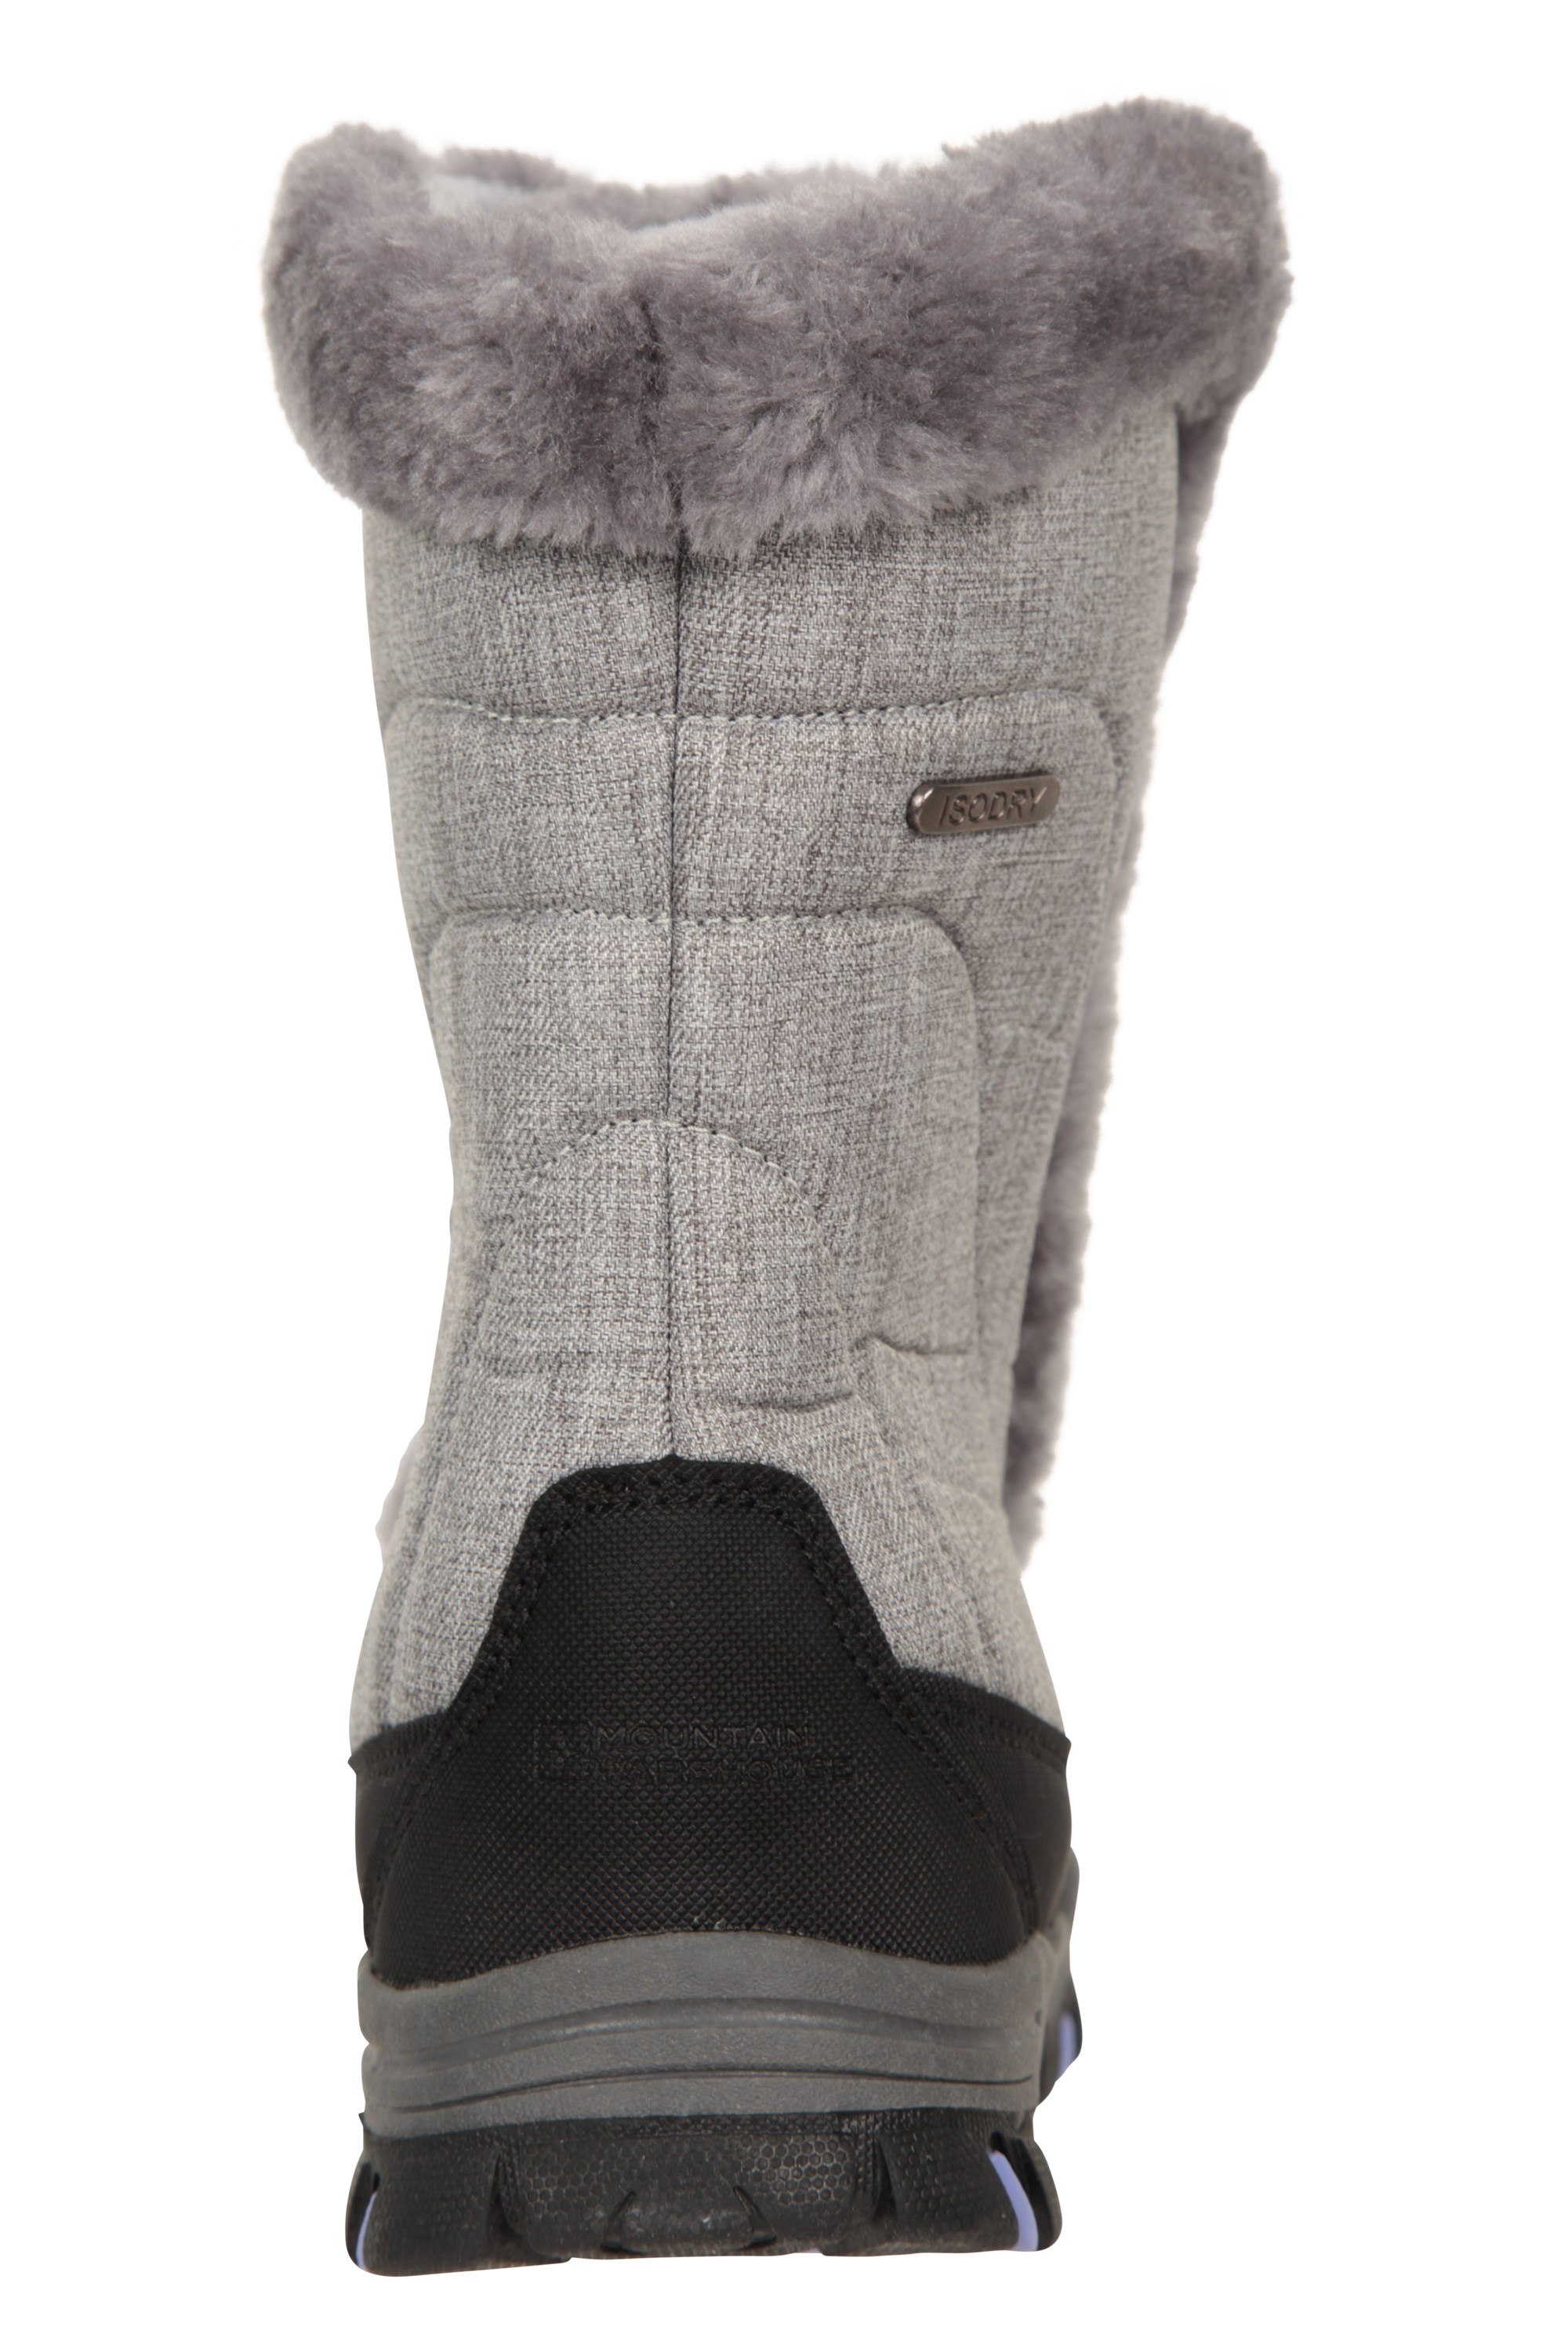 EU 36 RRP £59 5057652993902 Mountain Warehouse Ohio Kids Fleece Lined Dark Grey & Purple Snow Boots Size UK 4 